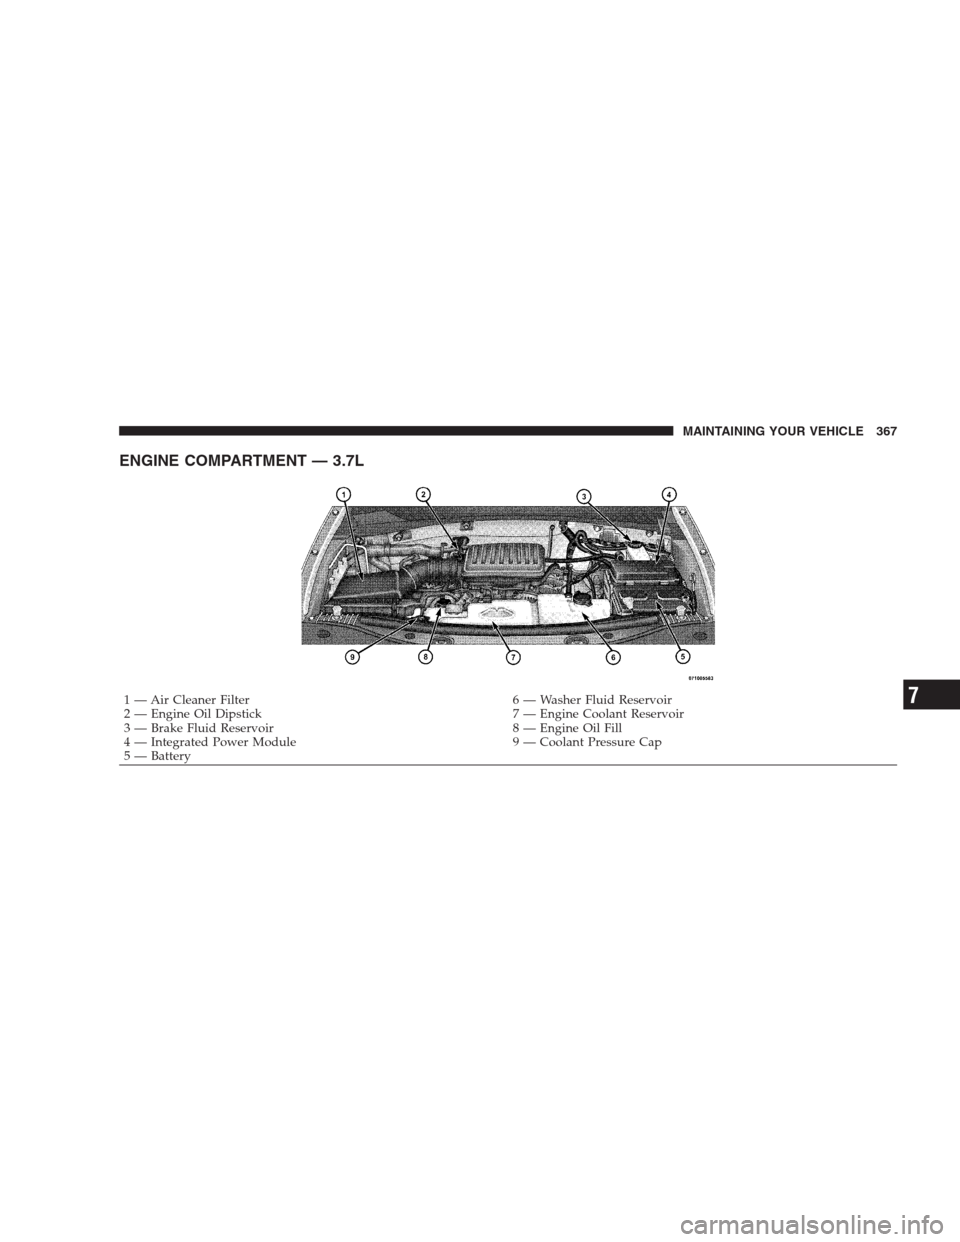 DODGE NITRO 2009 1.G Owners Manual ENGINE COMPARTMENT — 3.7L
1 — Air Cleaner Filter 6 — Washer Fluid Reservoir
2 — Engine Oil Dipstick 7 — Engine Coolant Reservoir
3 — Brake Fluid Reservoir 8 — Engine Oil Fill
4 — Integ